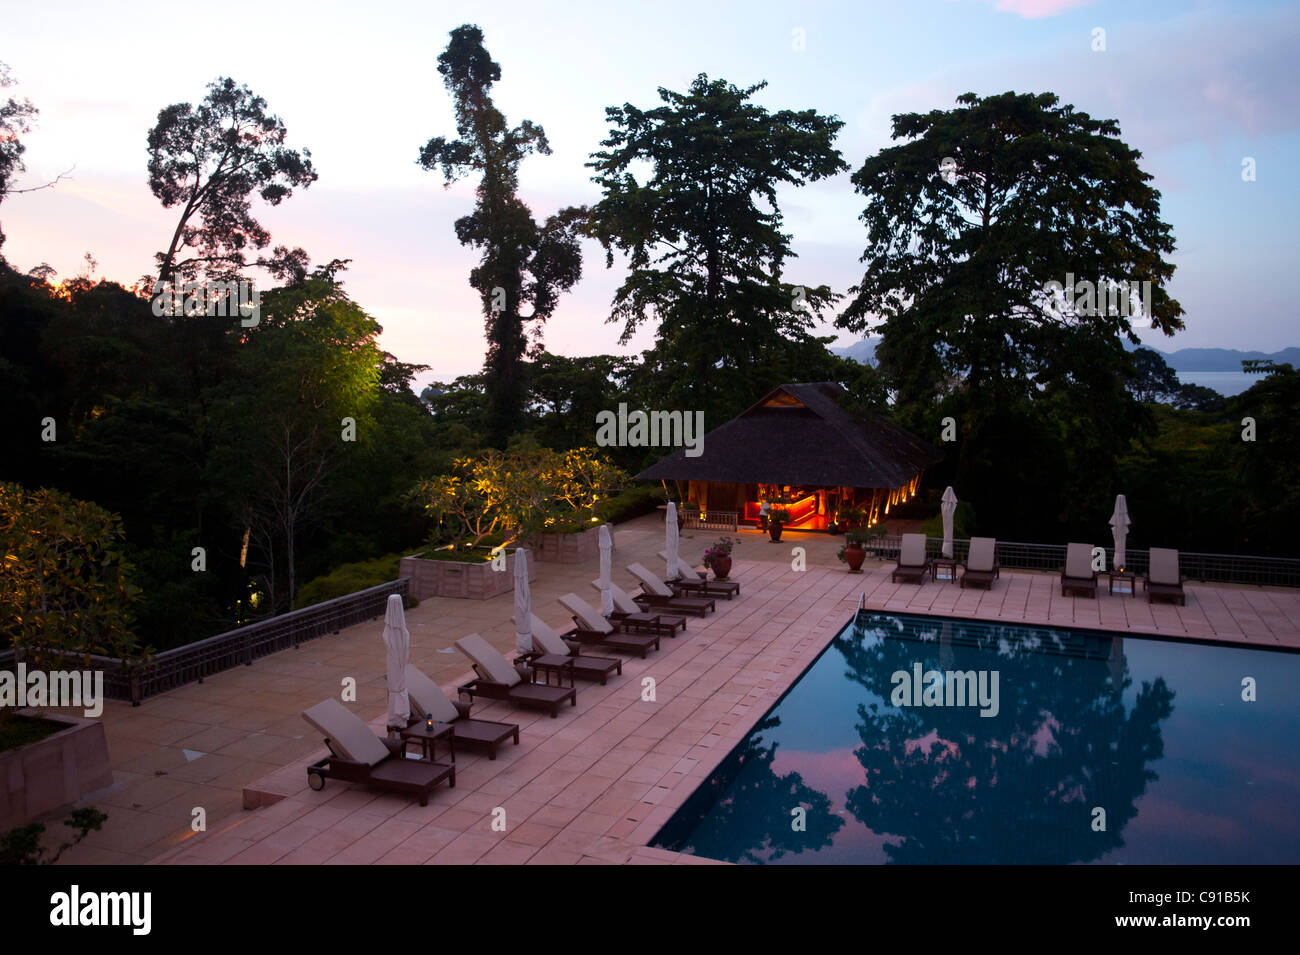 Pool and Thai restaurant in the evening, Datai Resort, Lankawi Island, Malaysia, Asia Stock Photo